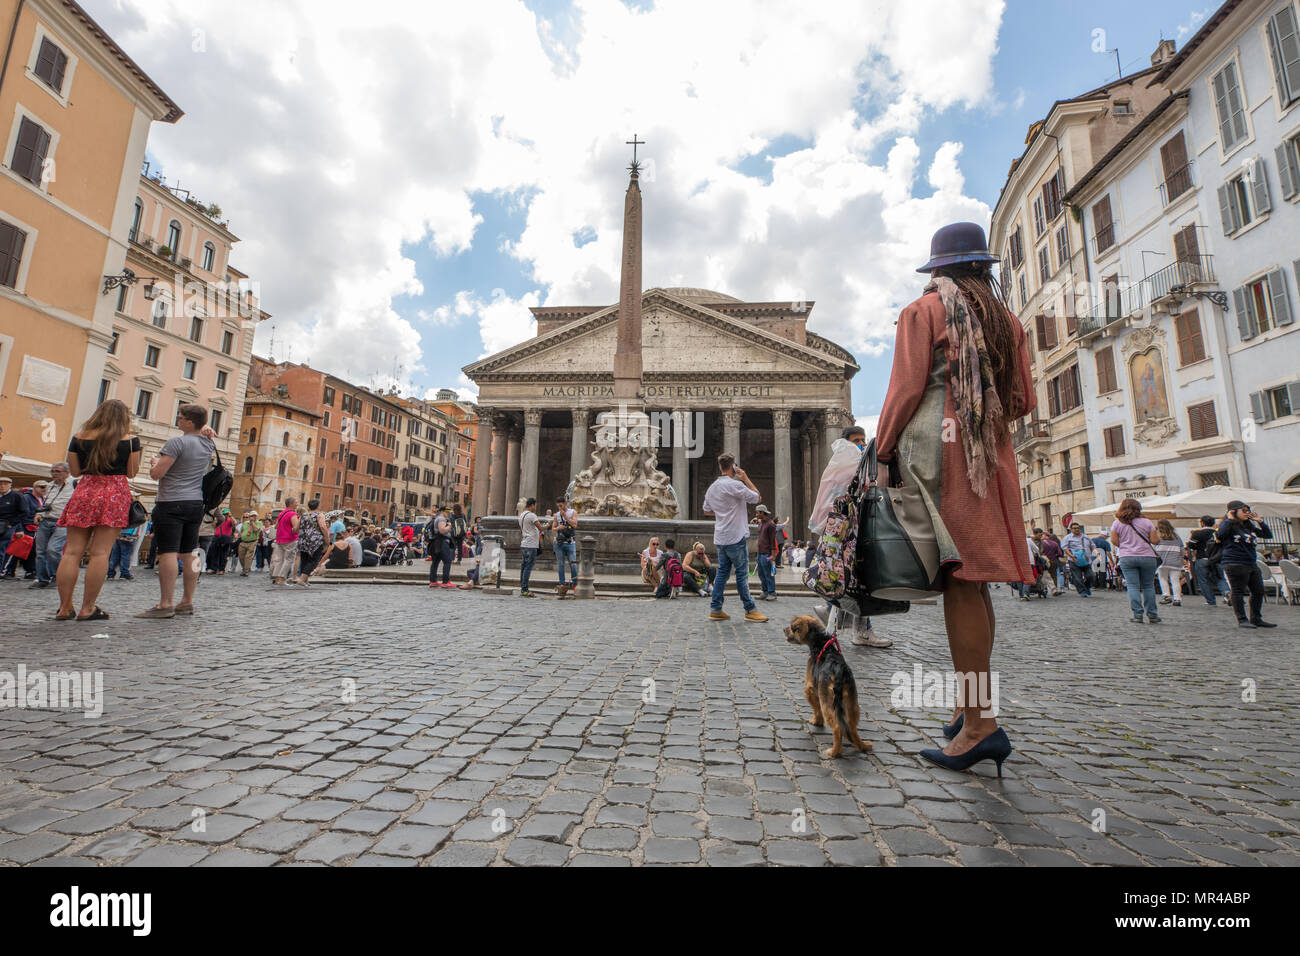 Rome Italy, Piazza della Rotonda, Pantheon,  tourists visiting the capital city monuments Stock Photo